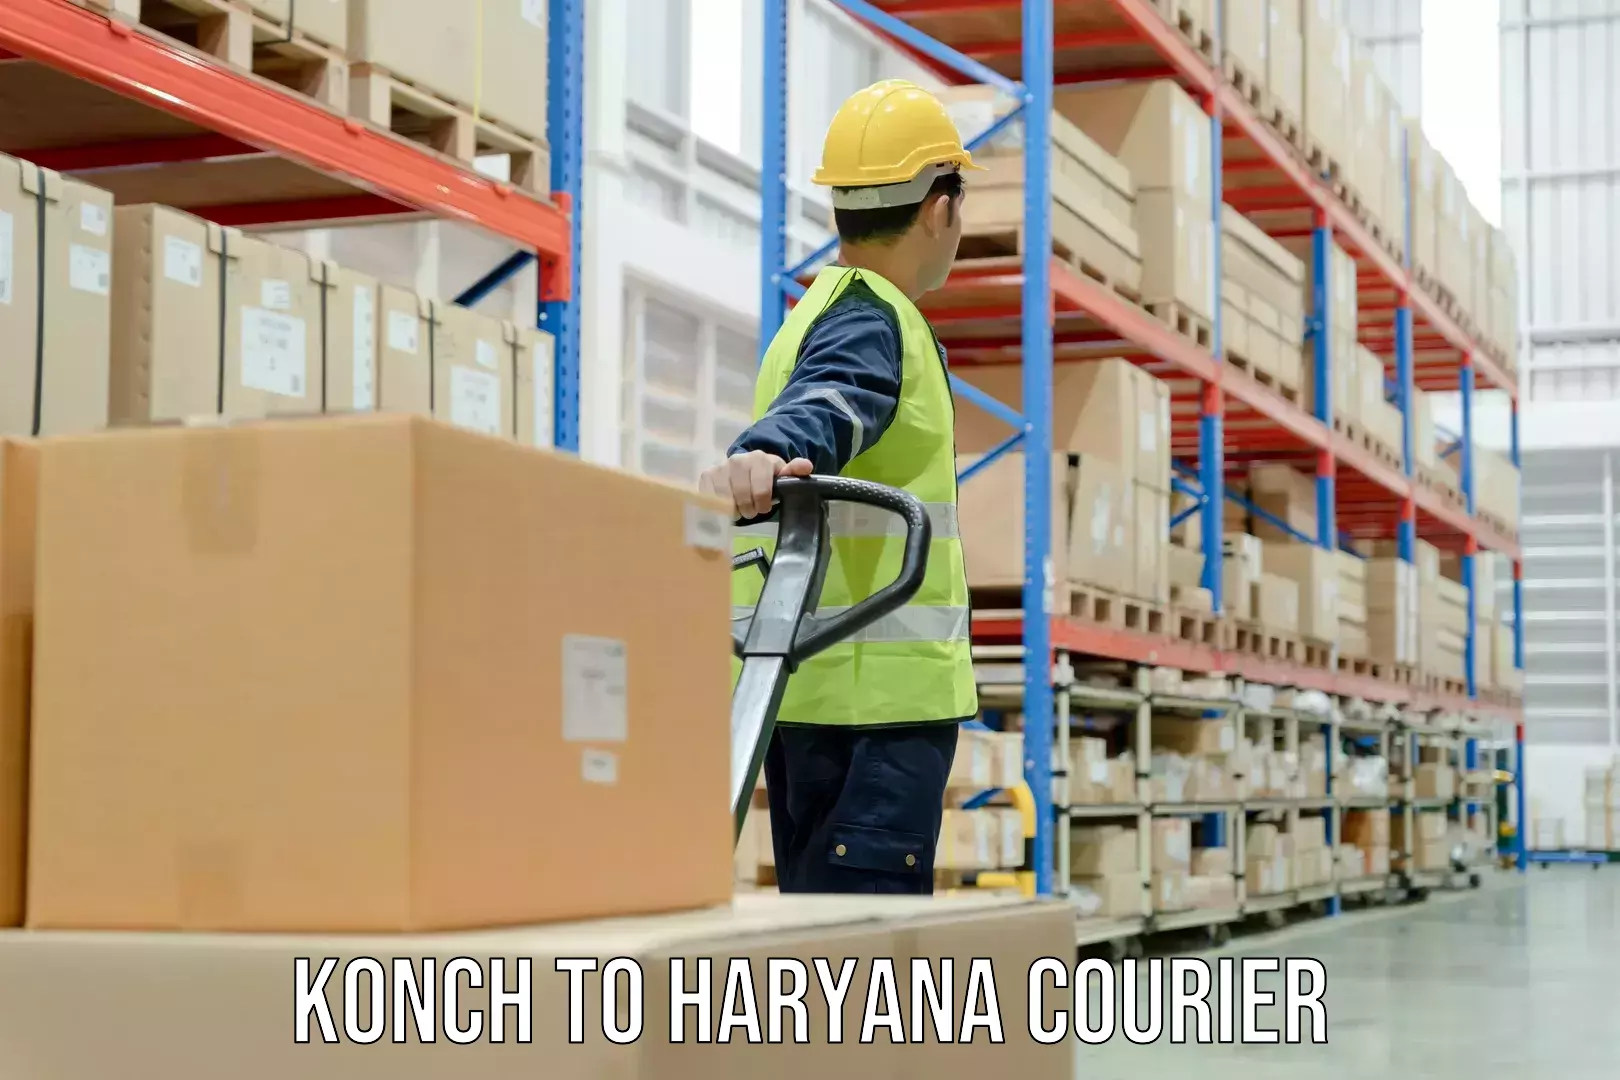 Courier service comparison Konch to Charkhi Dadri